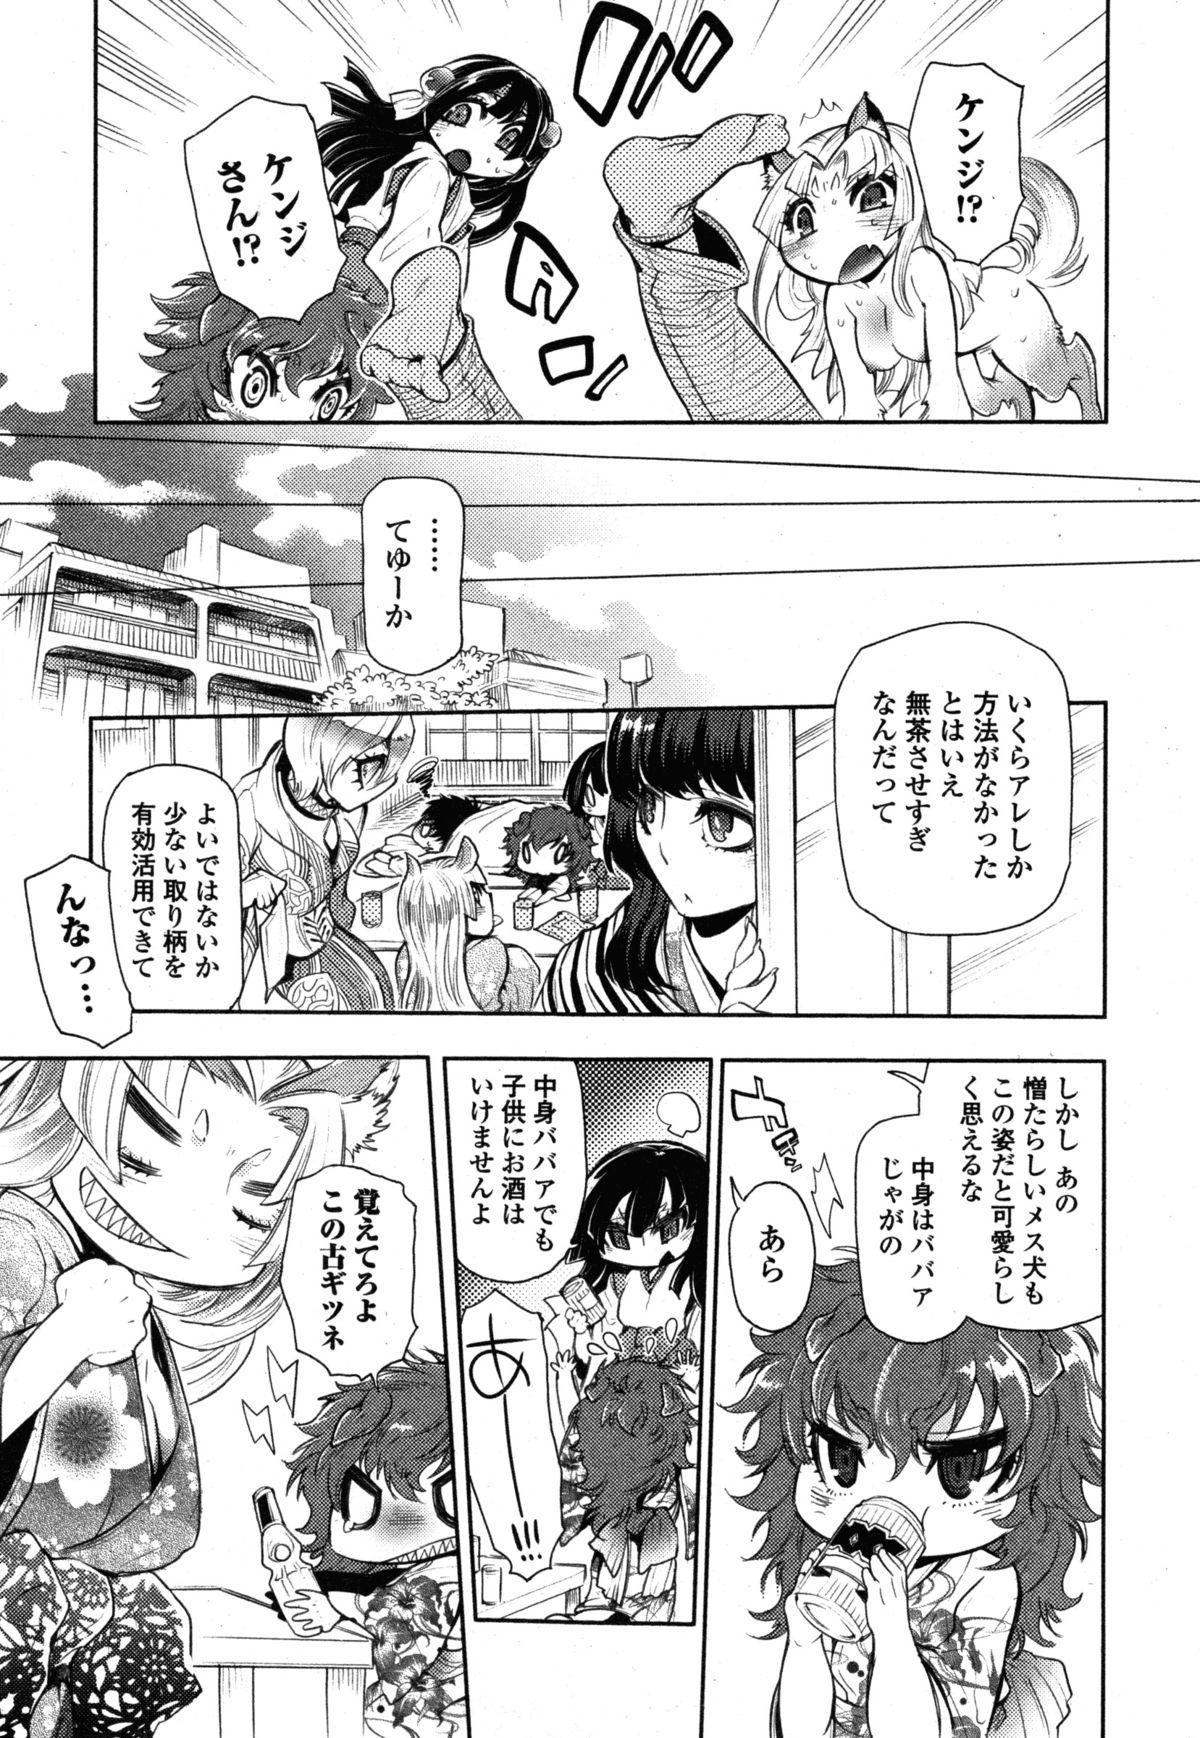 Speculum 2LDK Kitsune Tsuki Babe - Page 137